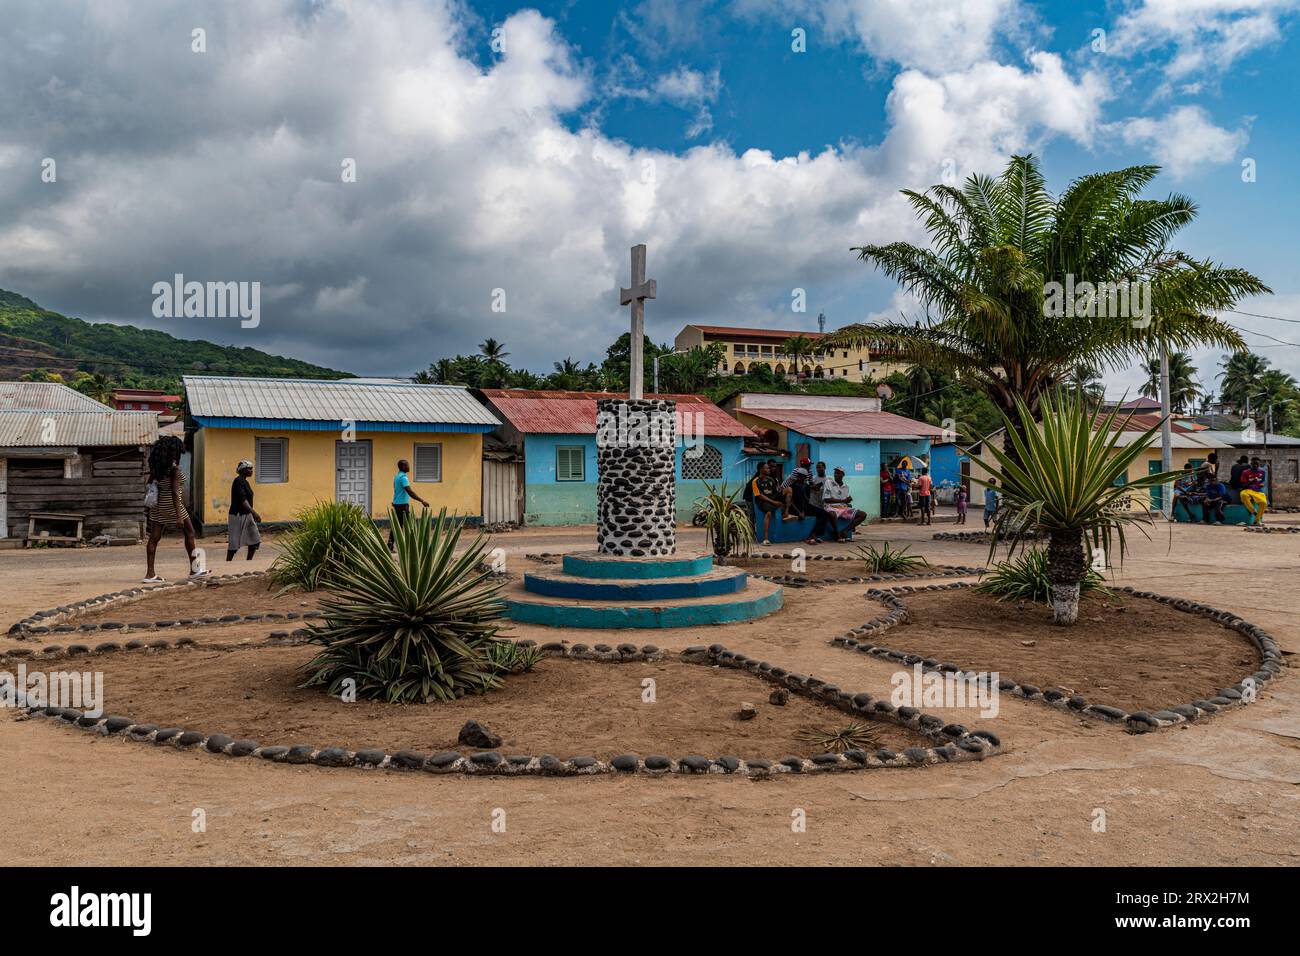 Village Square of San Antonio de Pale village, island of Annobon, Equatorial Guinea, Africa Stock Photo